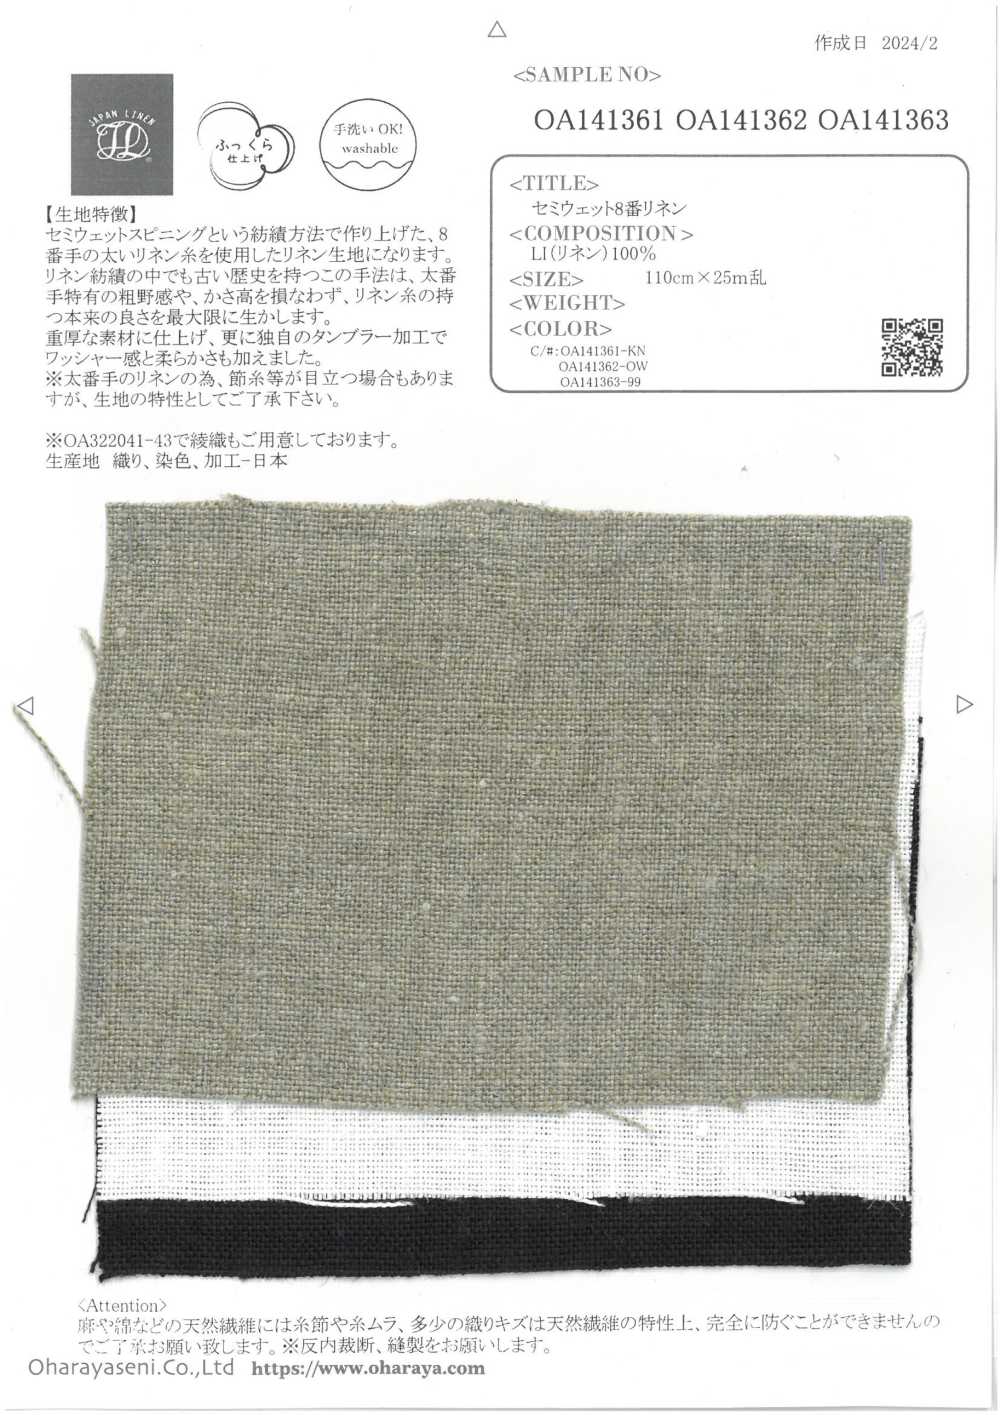 OA141363 Halbfeuchtes Leinen Nr. 8[Textilgewebe] Oharayaseni